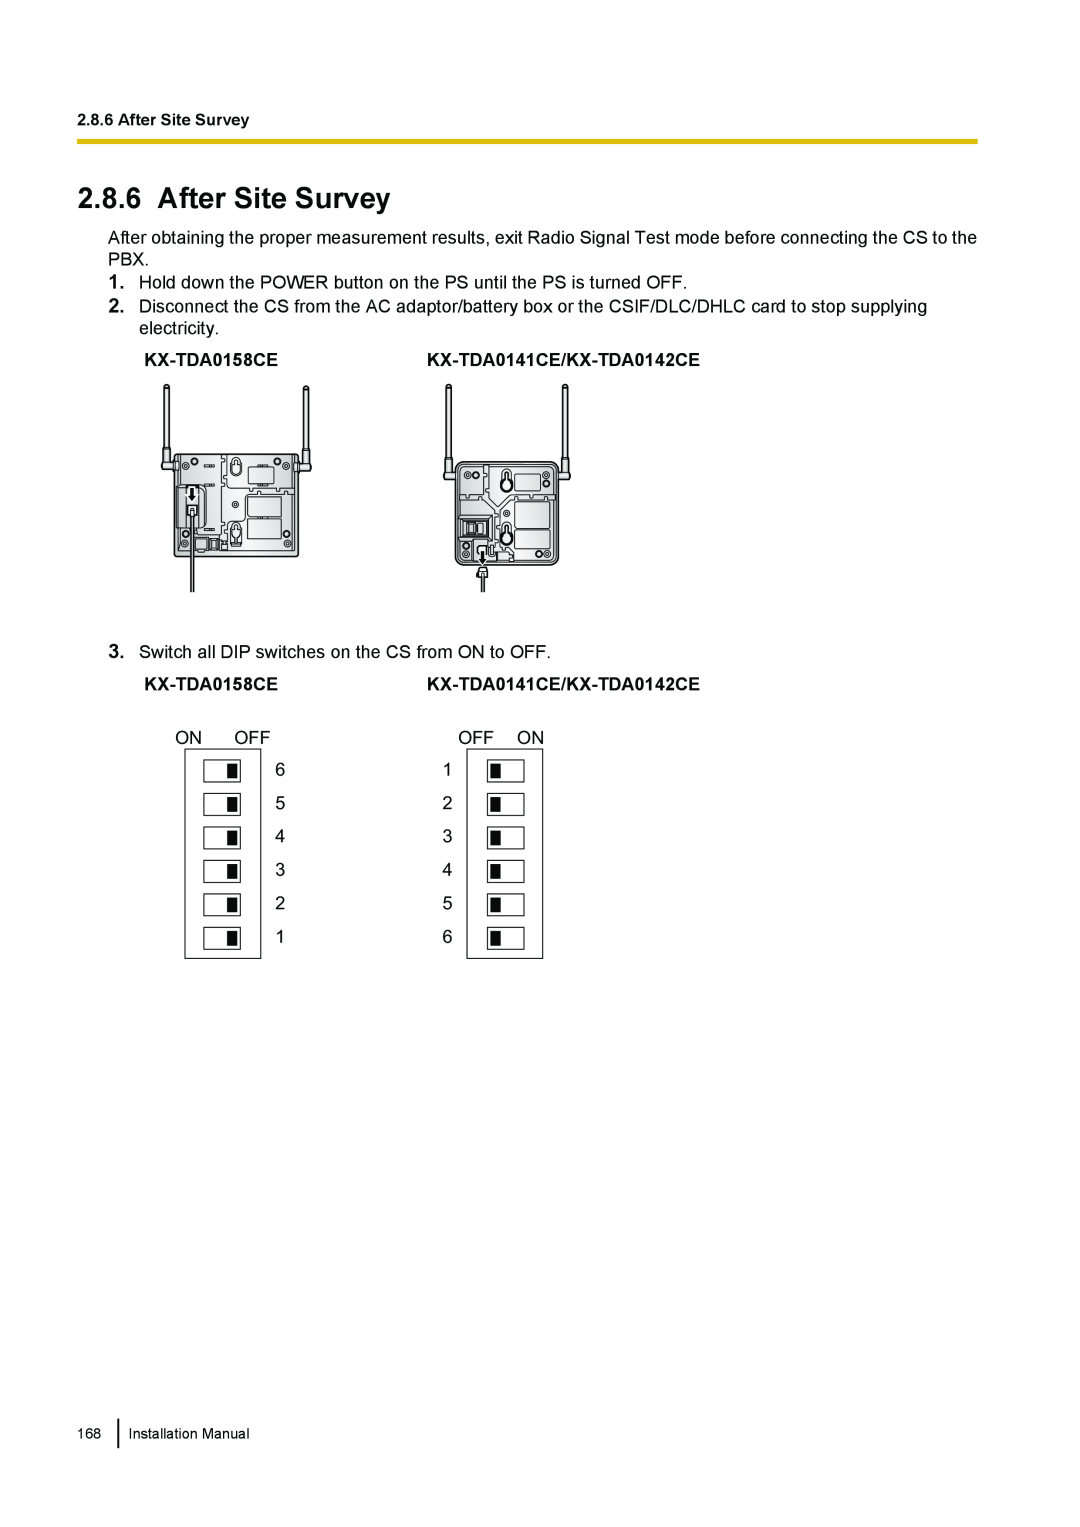 Panasonic KX-TDA100 installation manual After Site Survey, KX-TDA0158CEKX-TDA0141CE/KX-TDA0142CE 